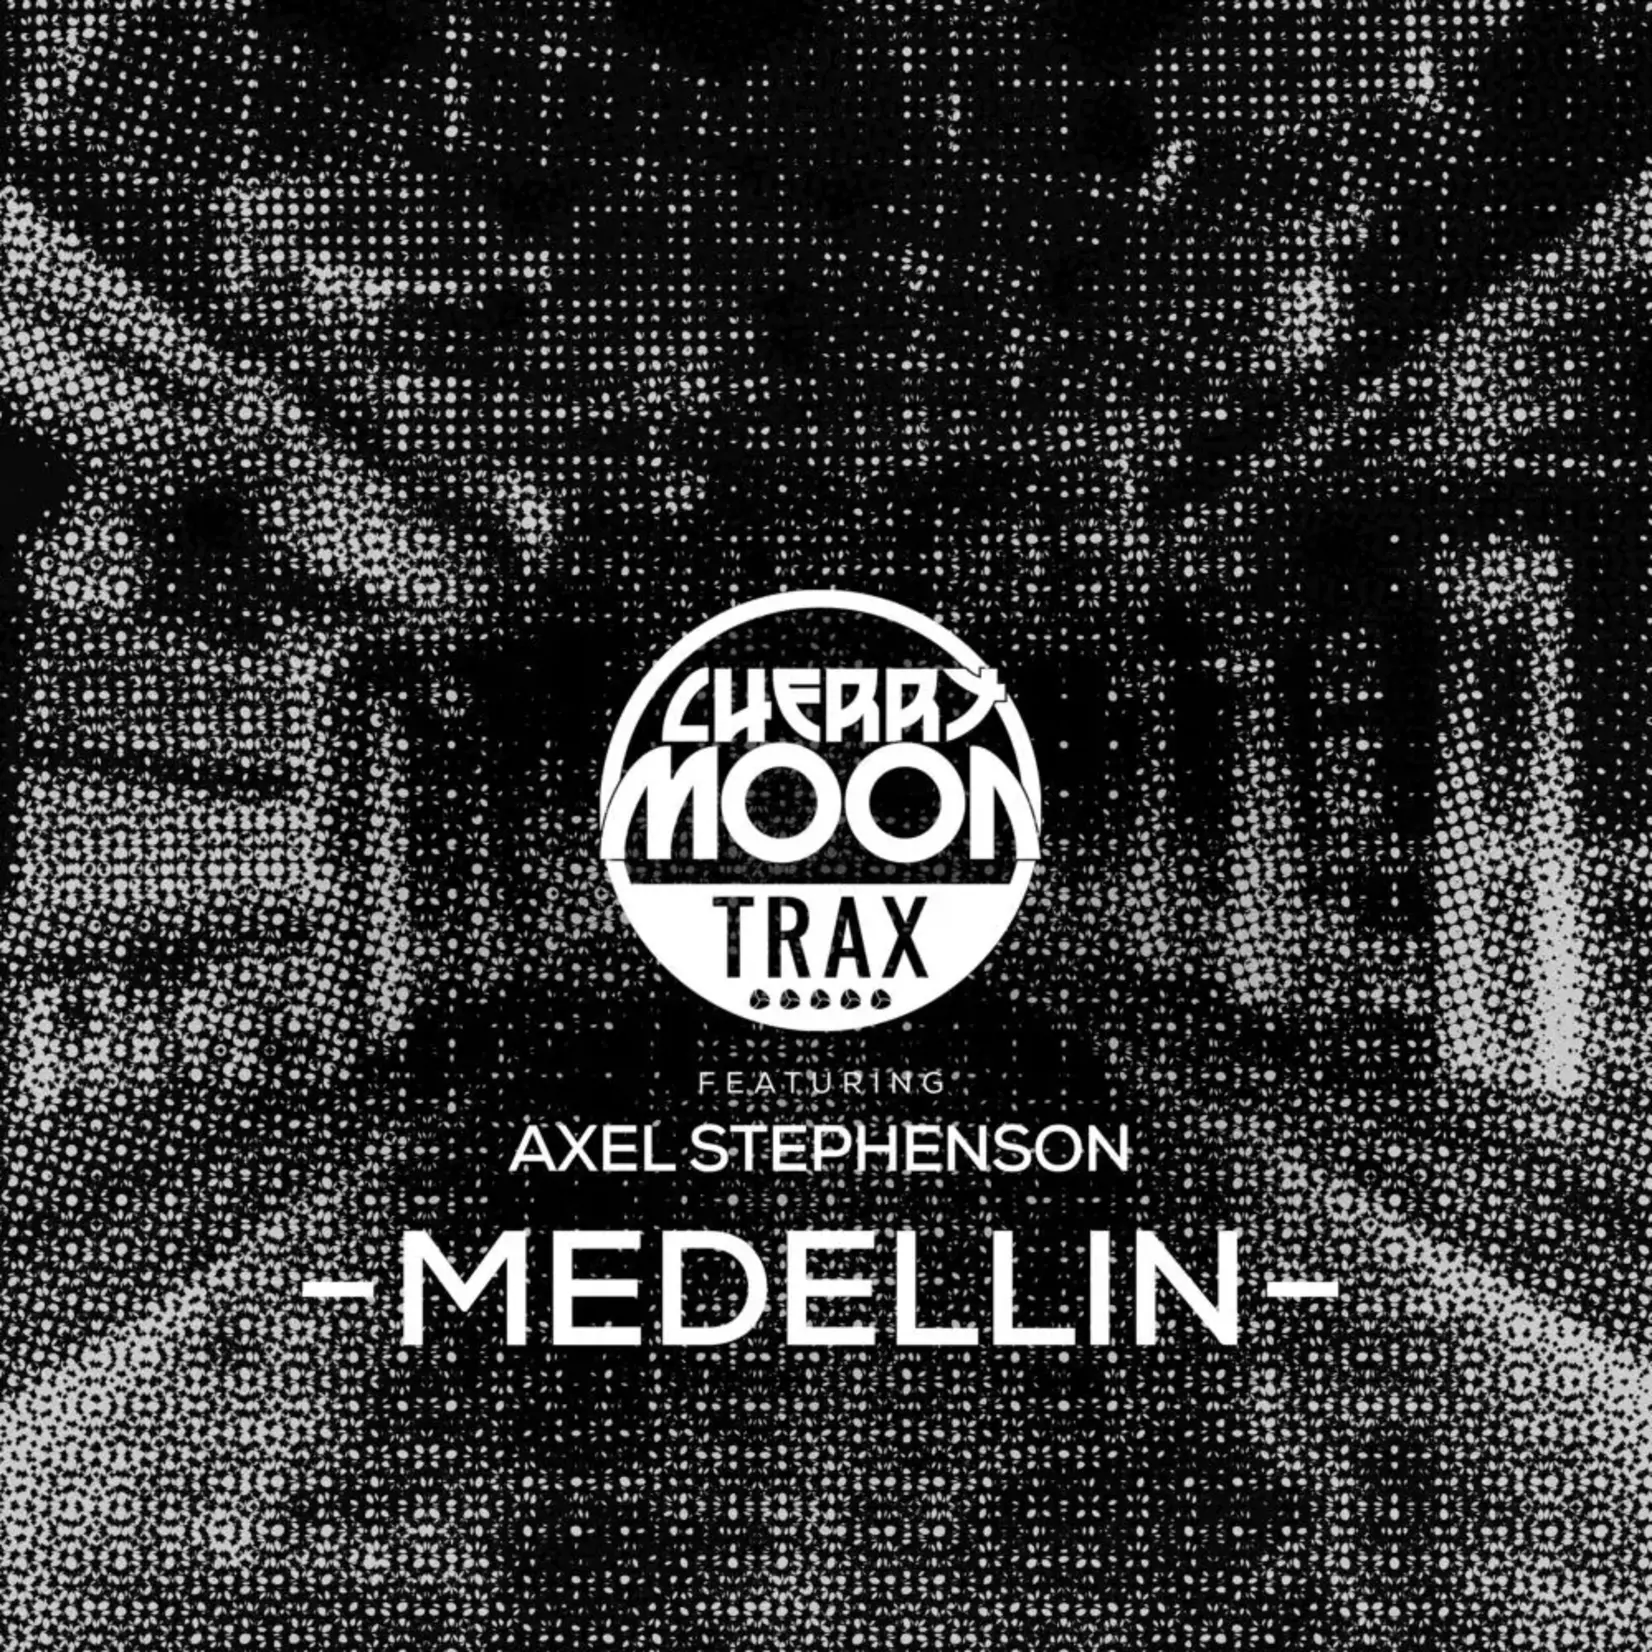 Cherry Moon Trax featuring Axel Stephenson – Medellin